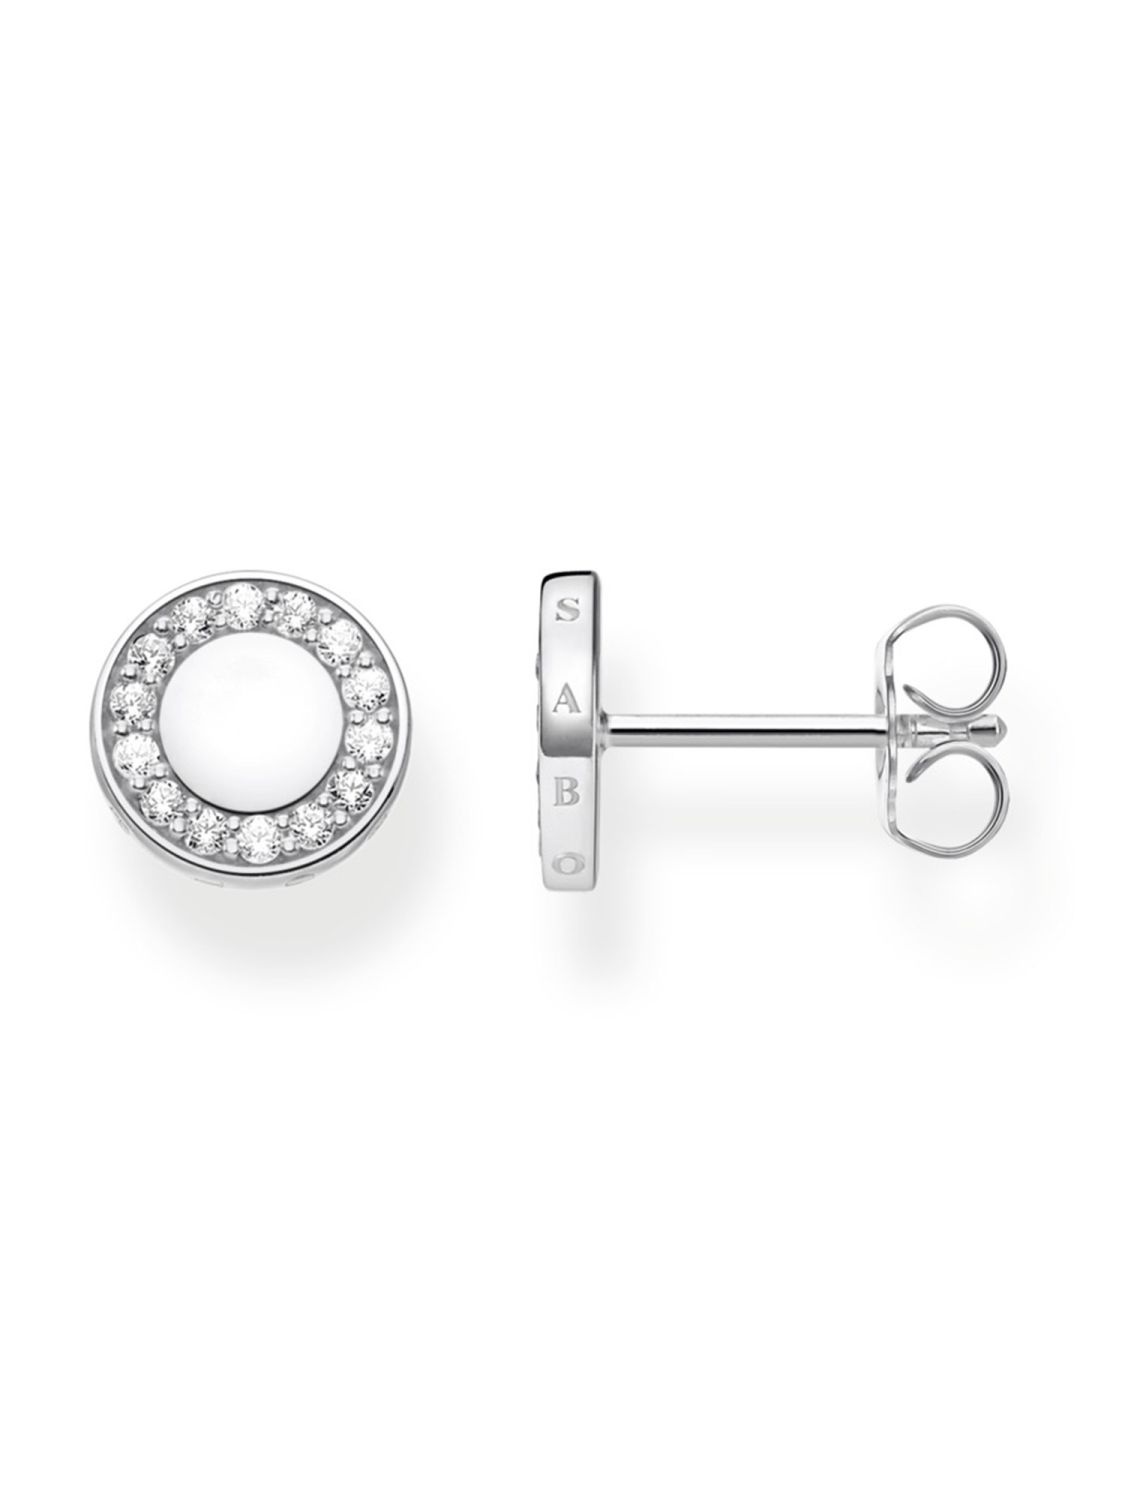 Circles Ladies\' Stud uhrcenter Sabo Thomas Silver Earrings • H2061-051-14